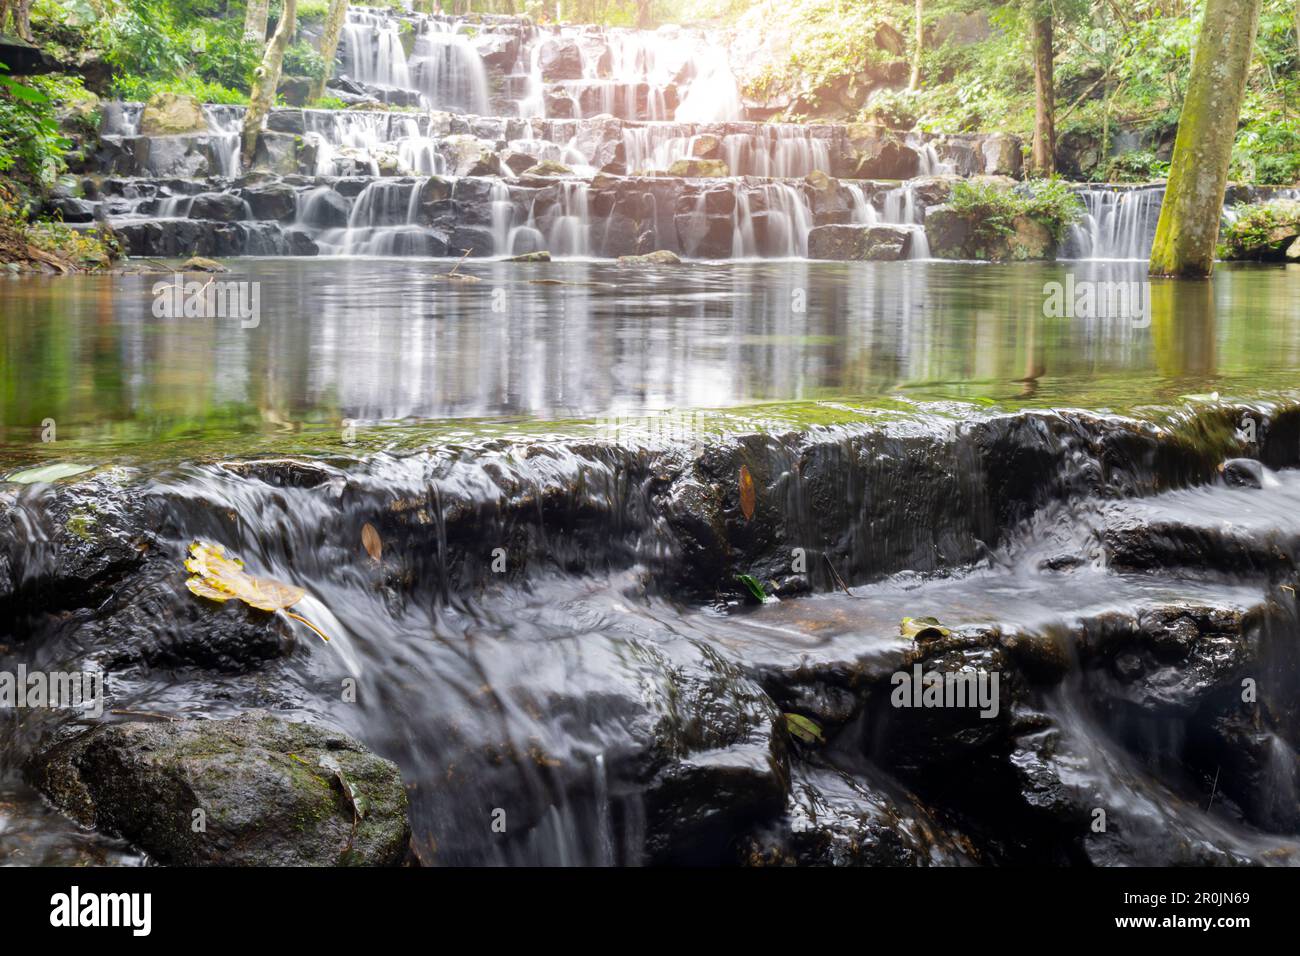 Amazing beautiful Sam Lan waterfalls, Khao Sam Lan National Park, Saraburi province Thailand Stock Photo